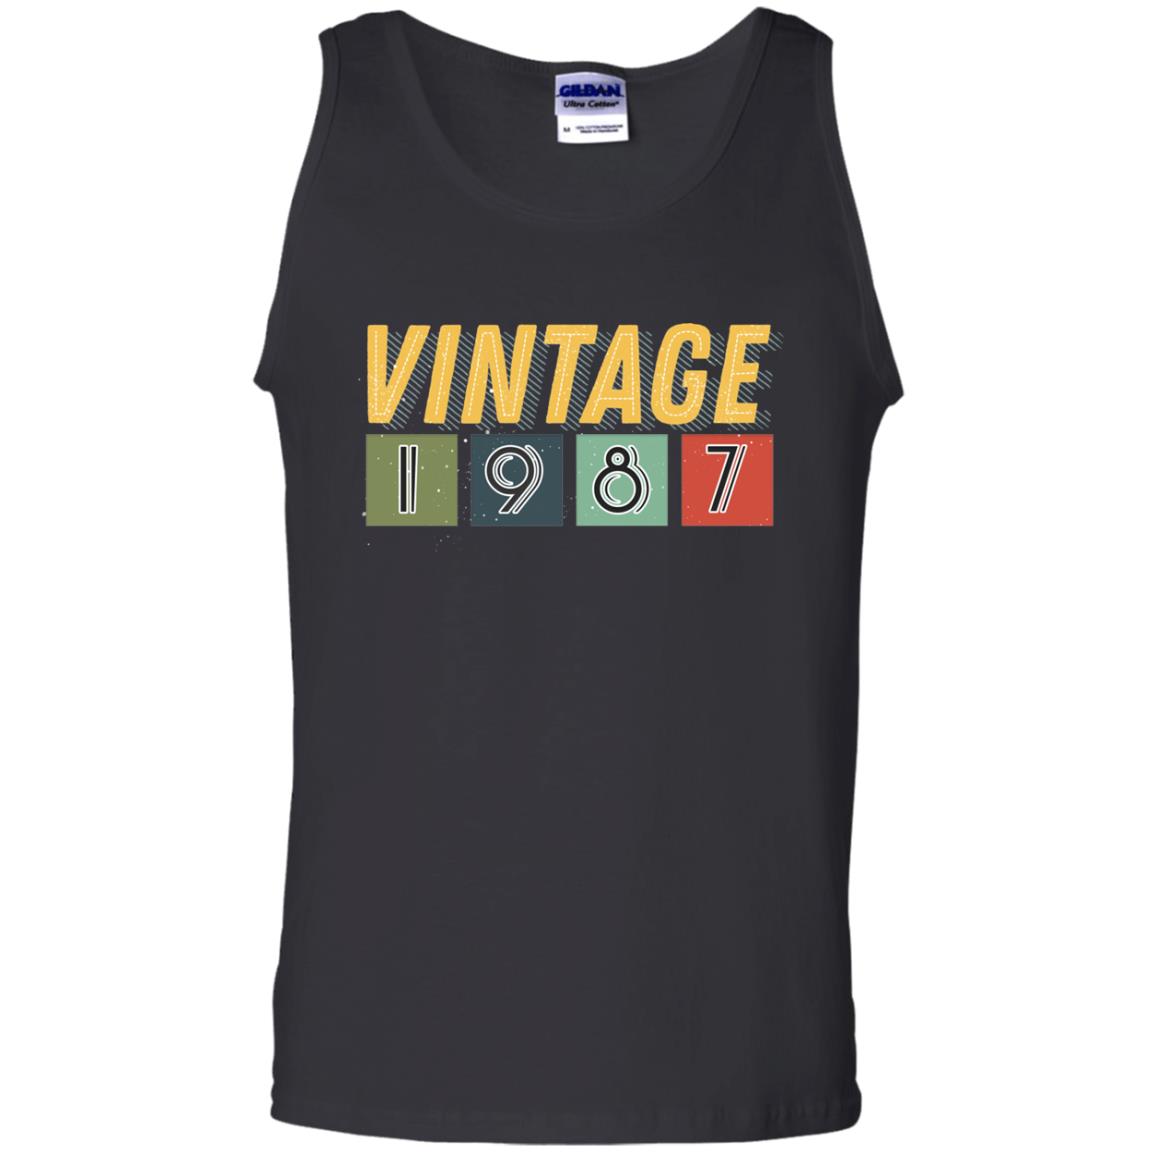 Vintage 1987 31th Birthday Gift Shirt For Mens Or WomensG220 Gildan 100% Cotton Tank Top